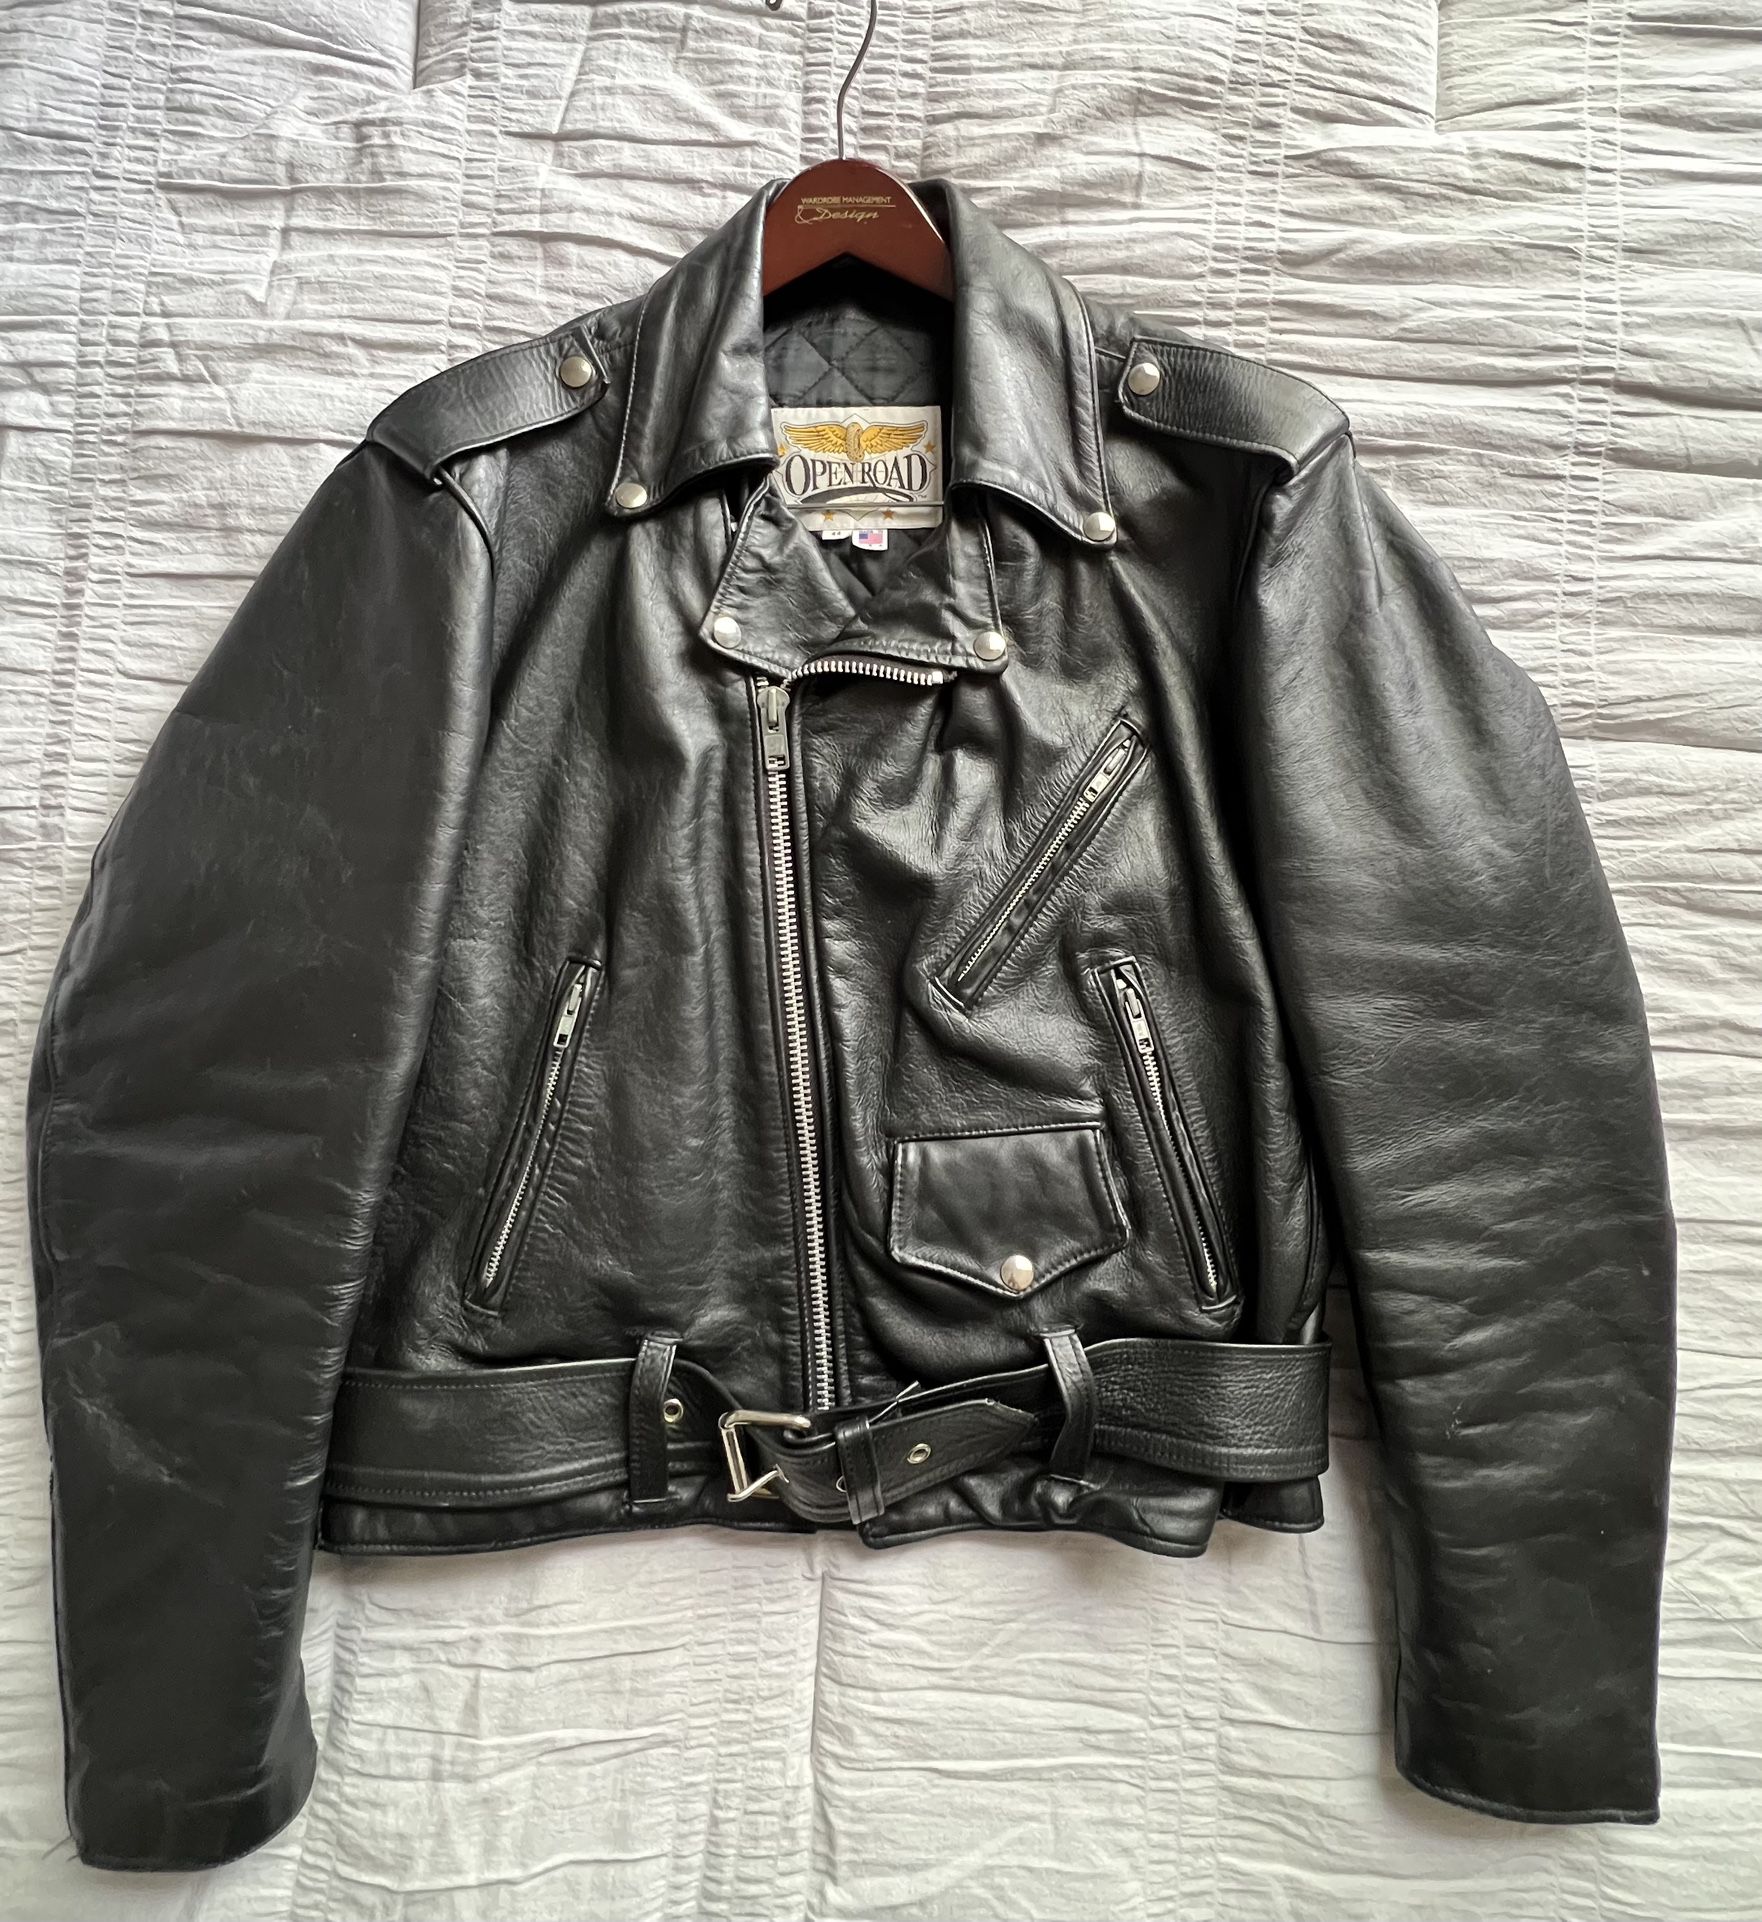 Open Road Leather Jacket Vintage Biker Punk Size 44 for Sale in ...